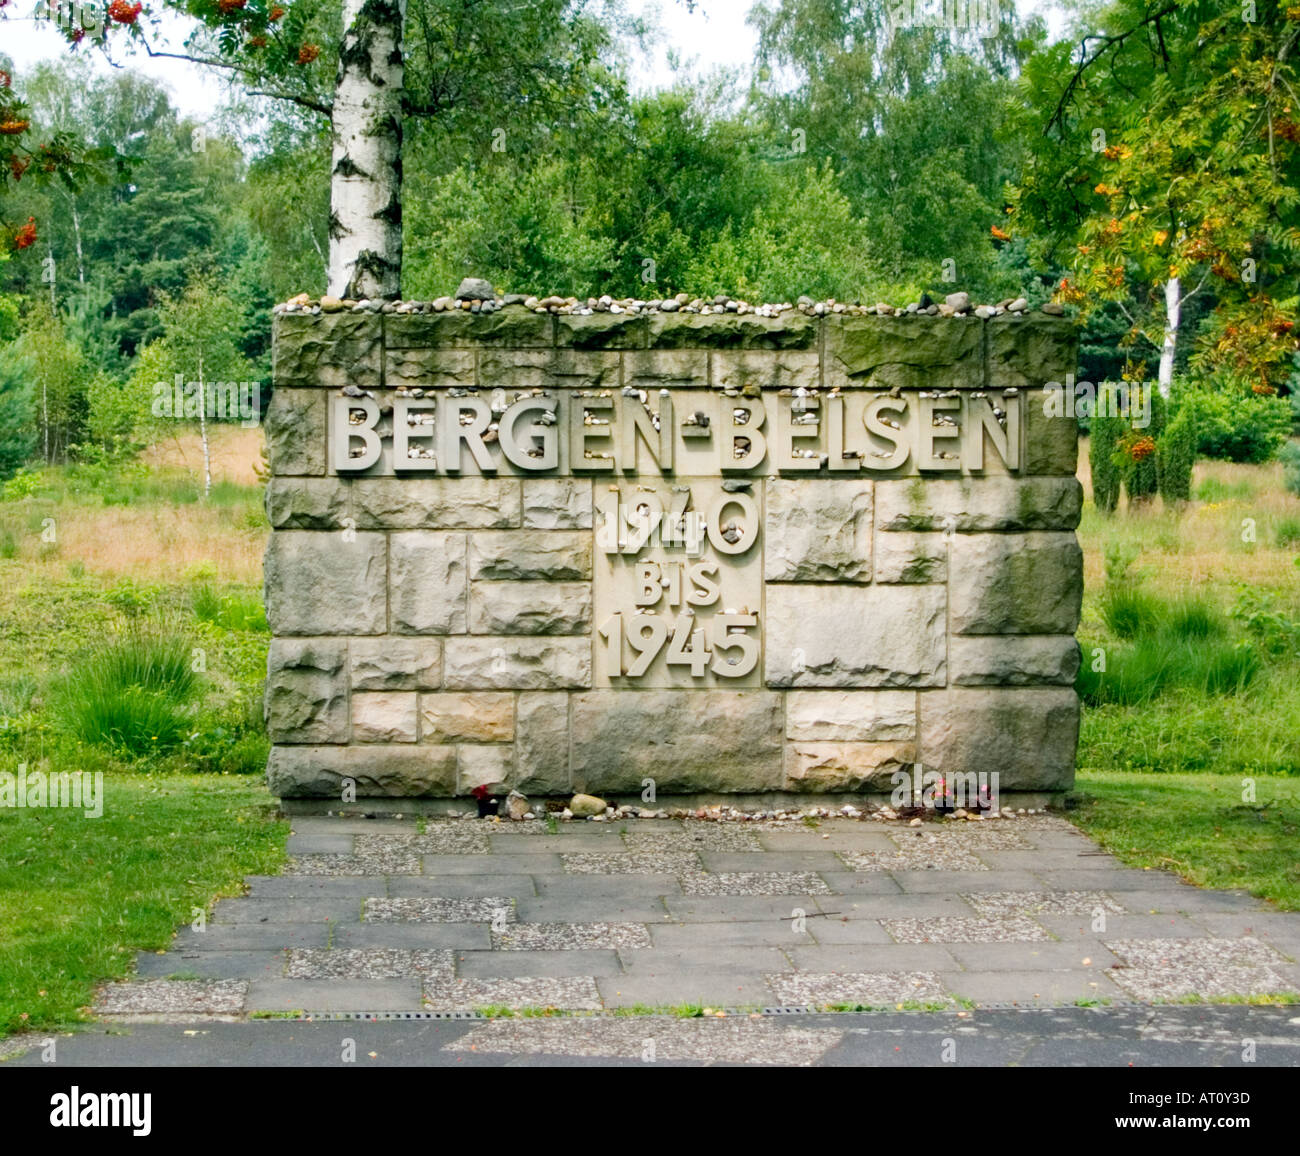 Entrance to Bergen Belsen Concentration camp Stock Photo